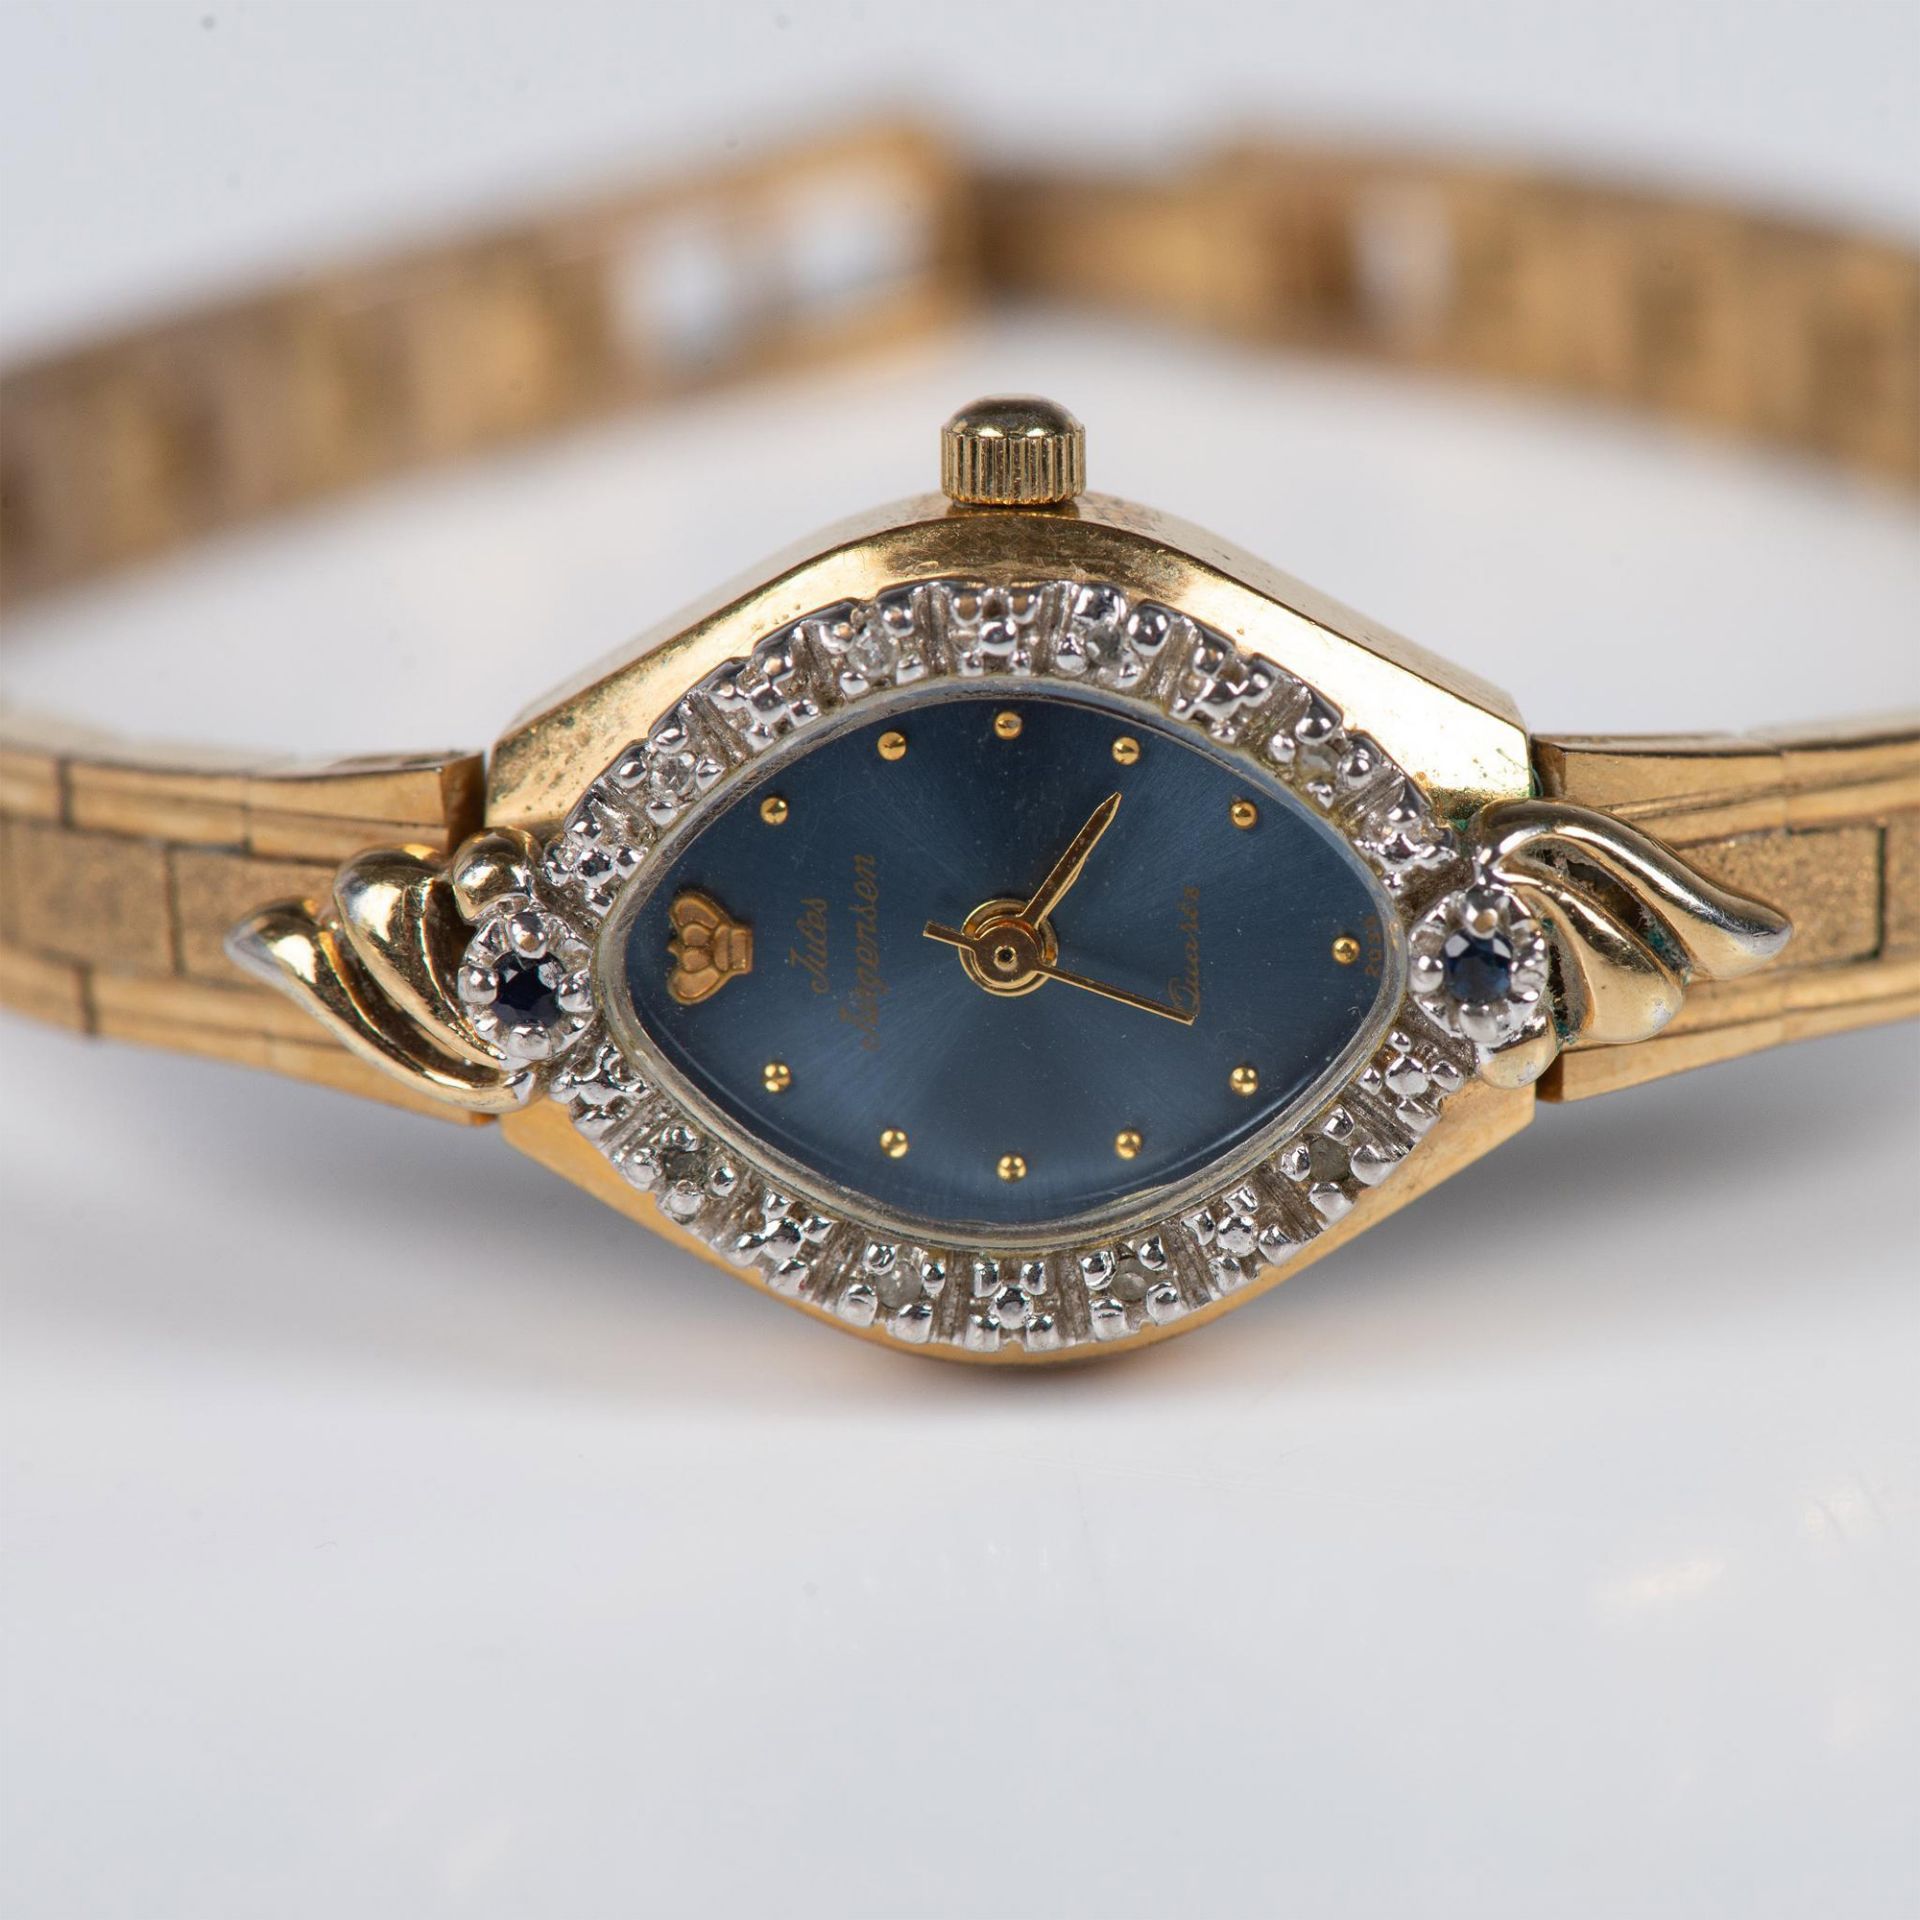 Jules Jurgensen 14K Gold Plated Diamond and Sapphire Watch - Image 2 of 4